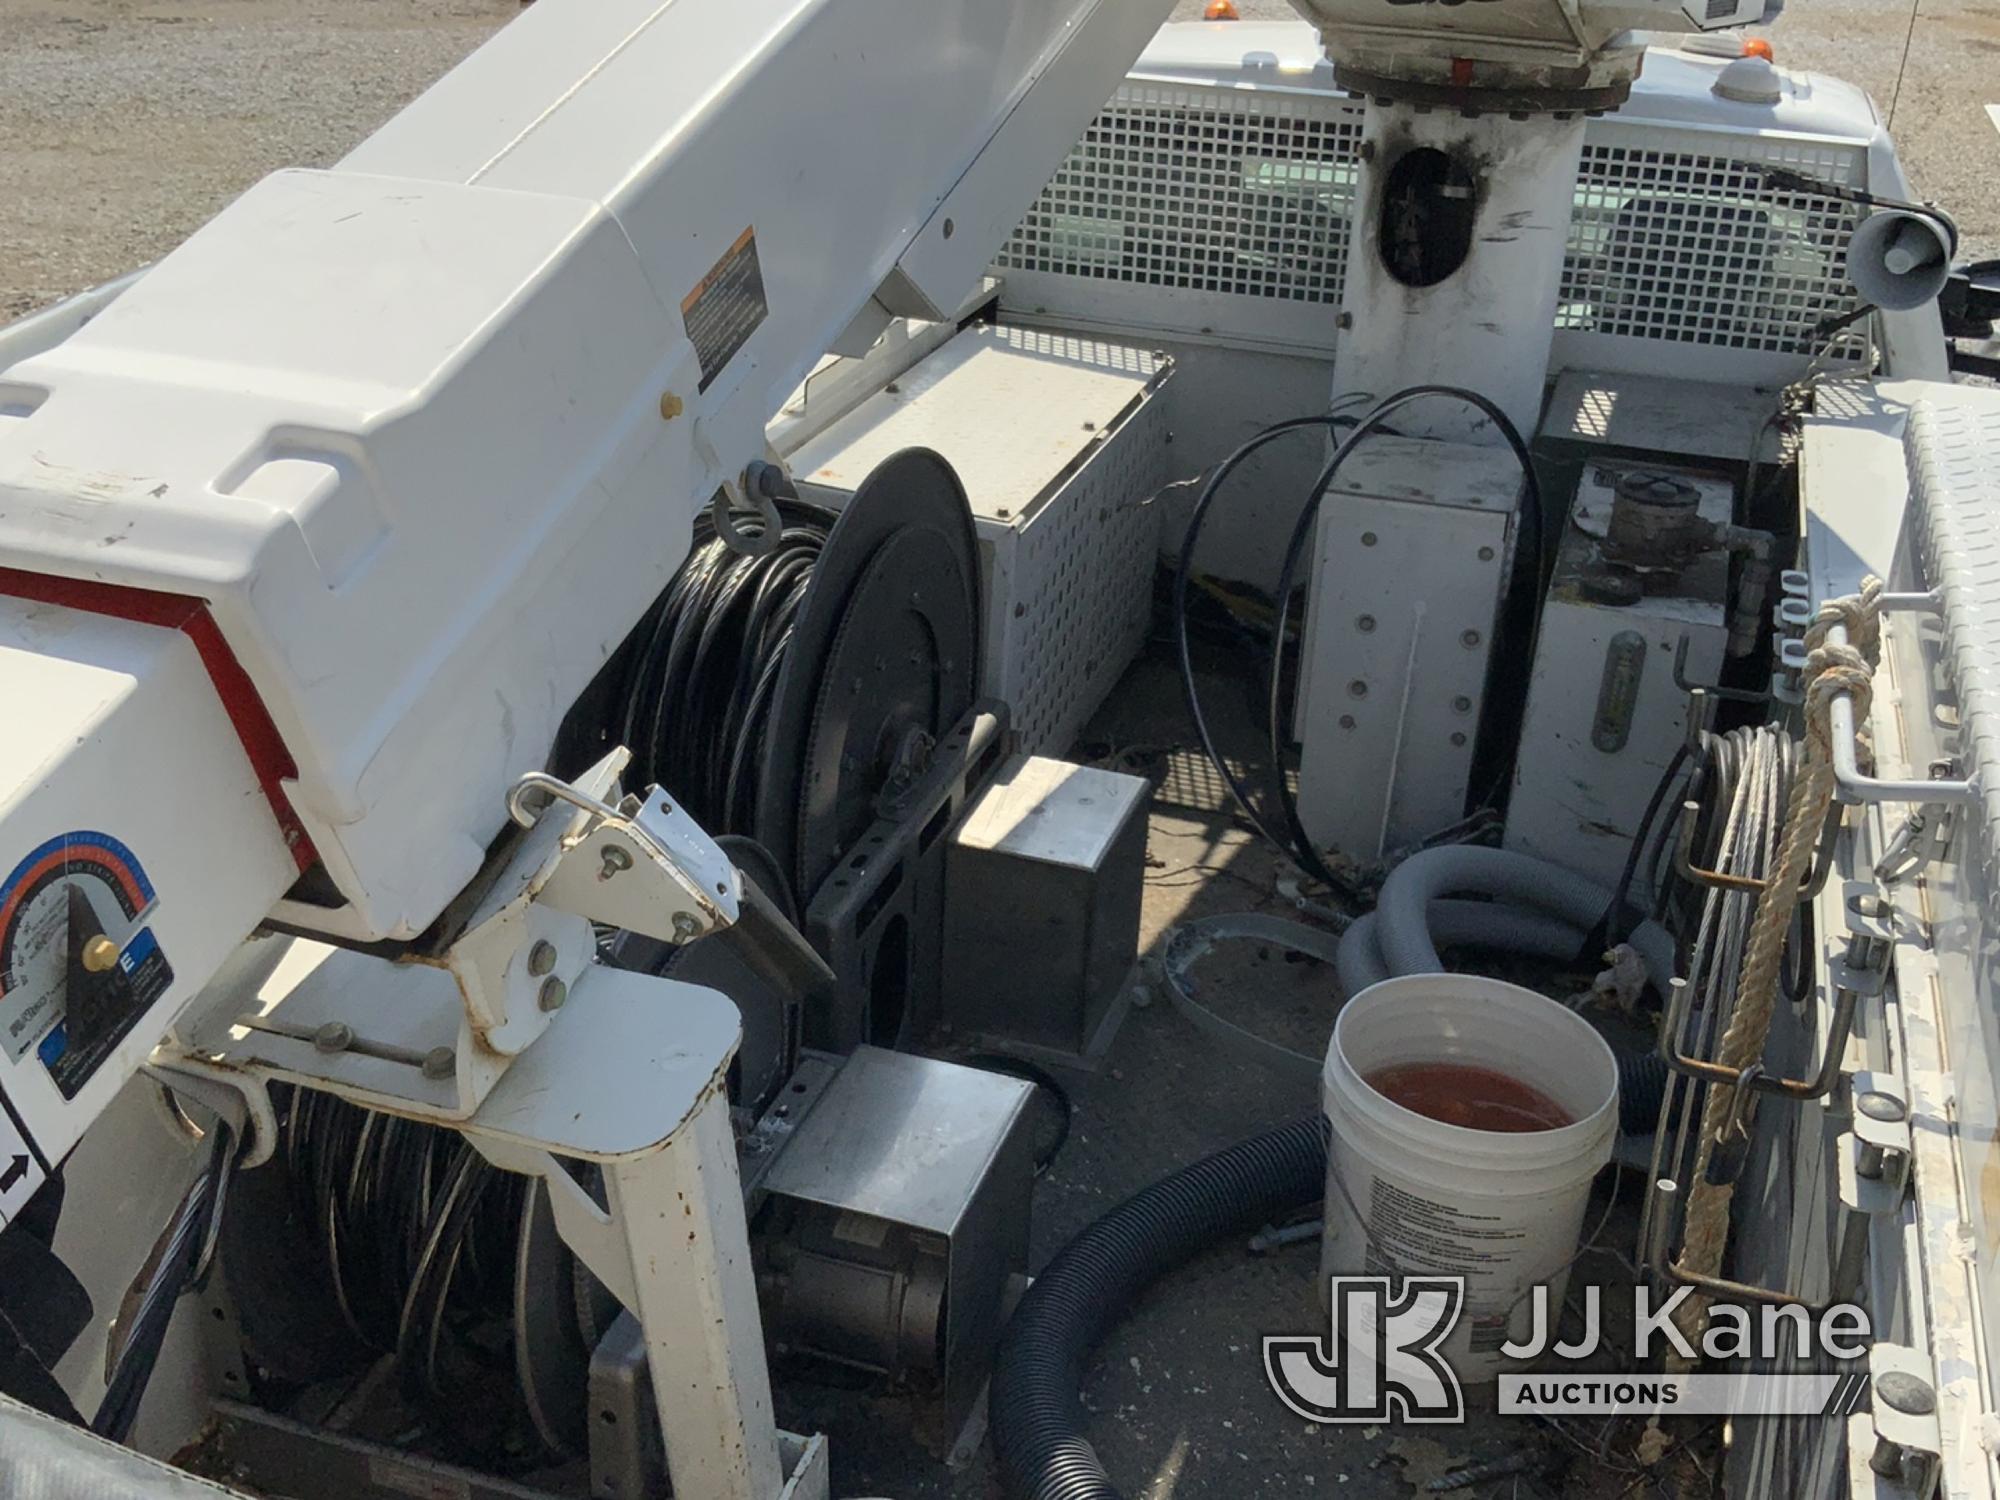 (Joplin, MO) Altec AT40-MH, Articulating & Telescopic Material Handling Bucket Truck mounted behind